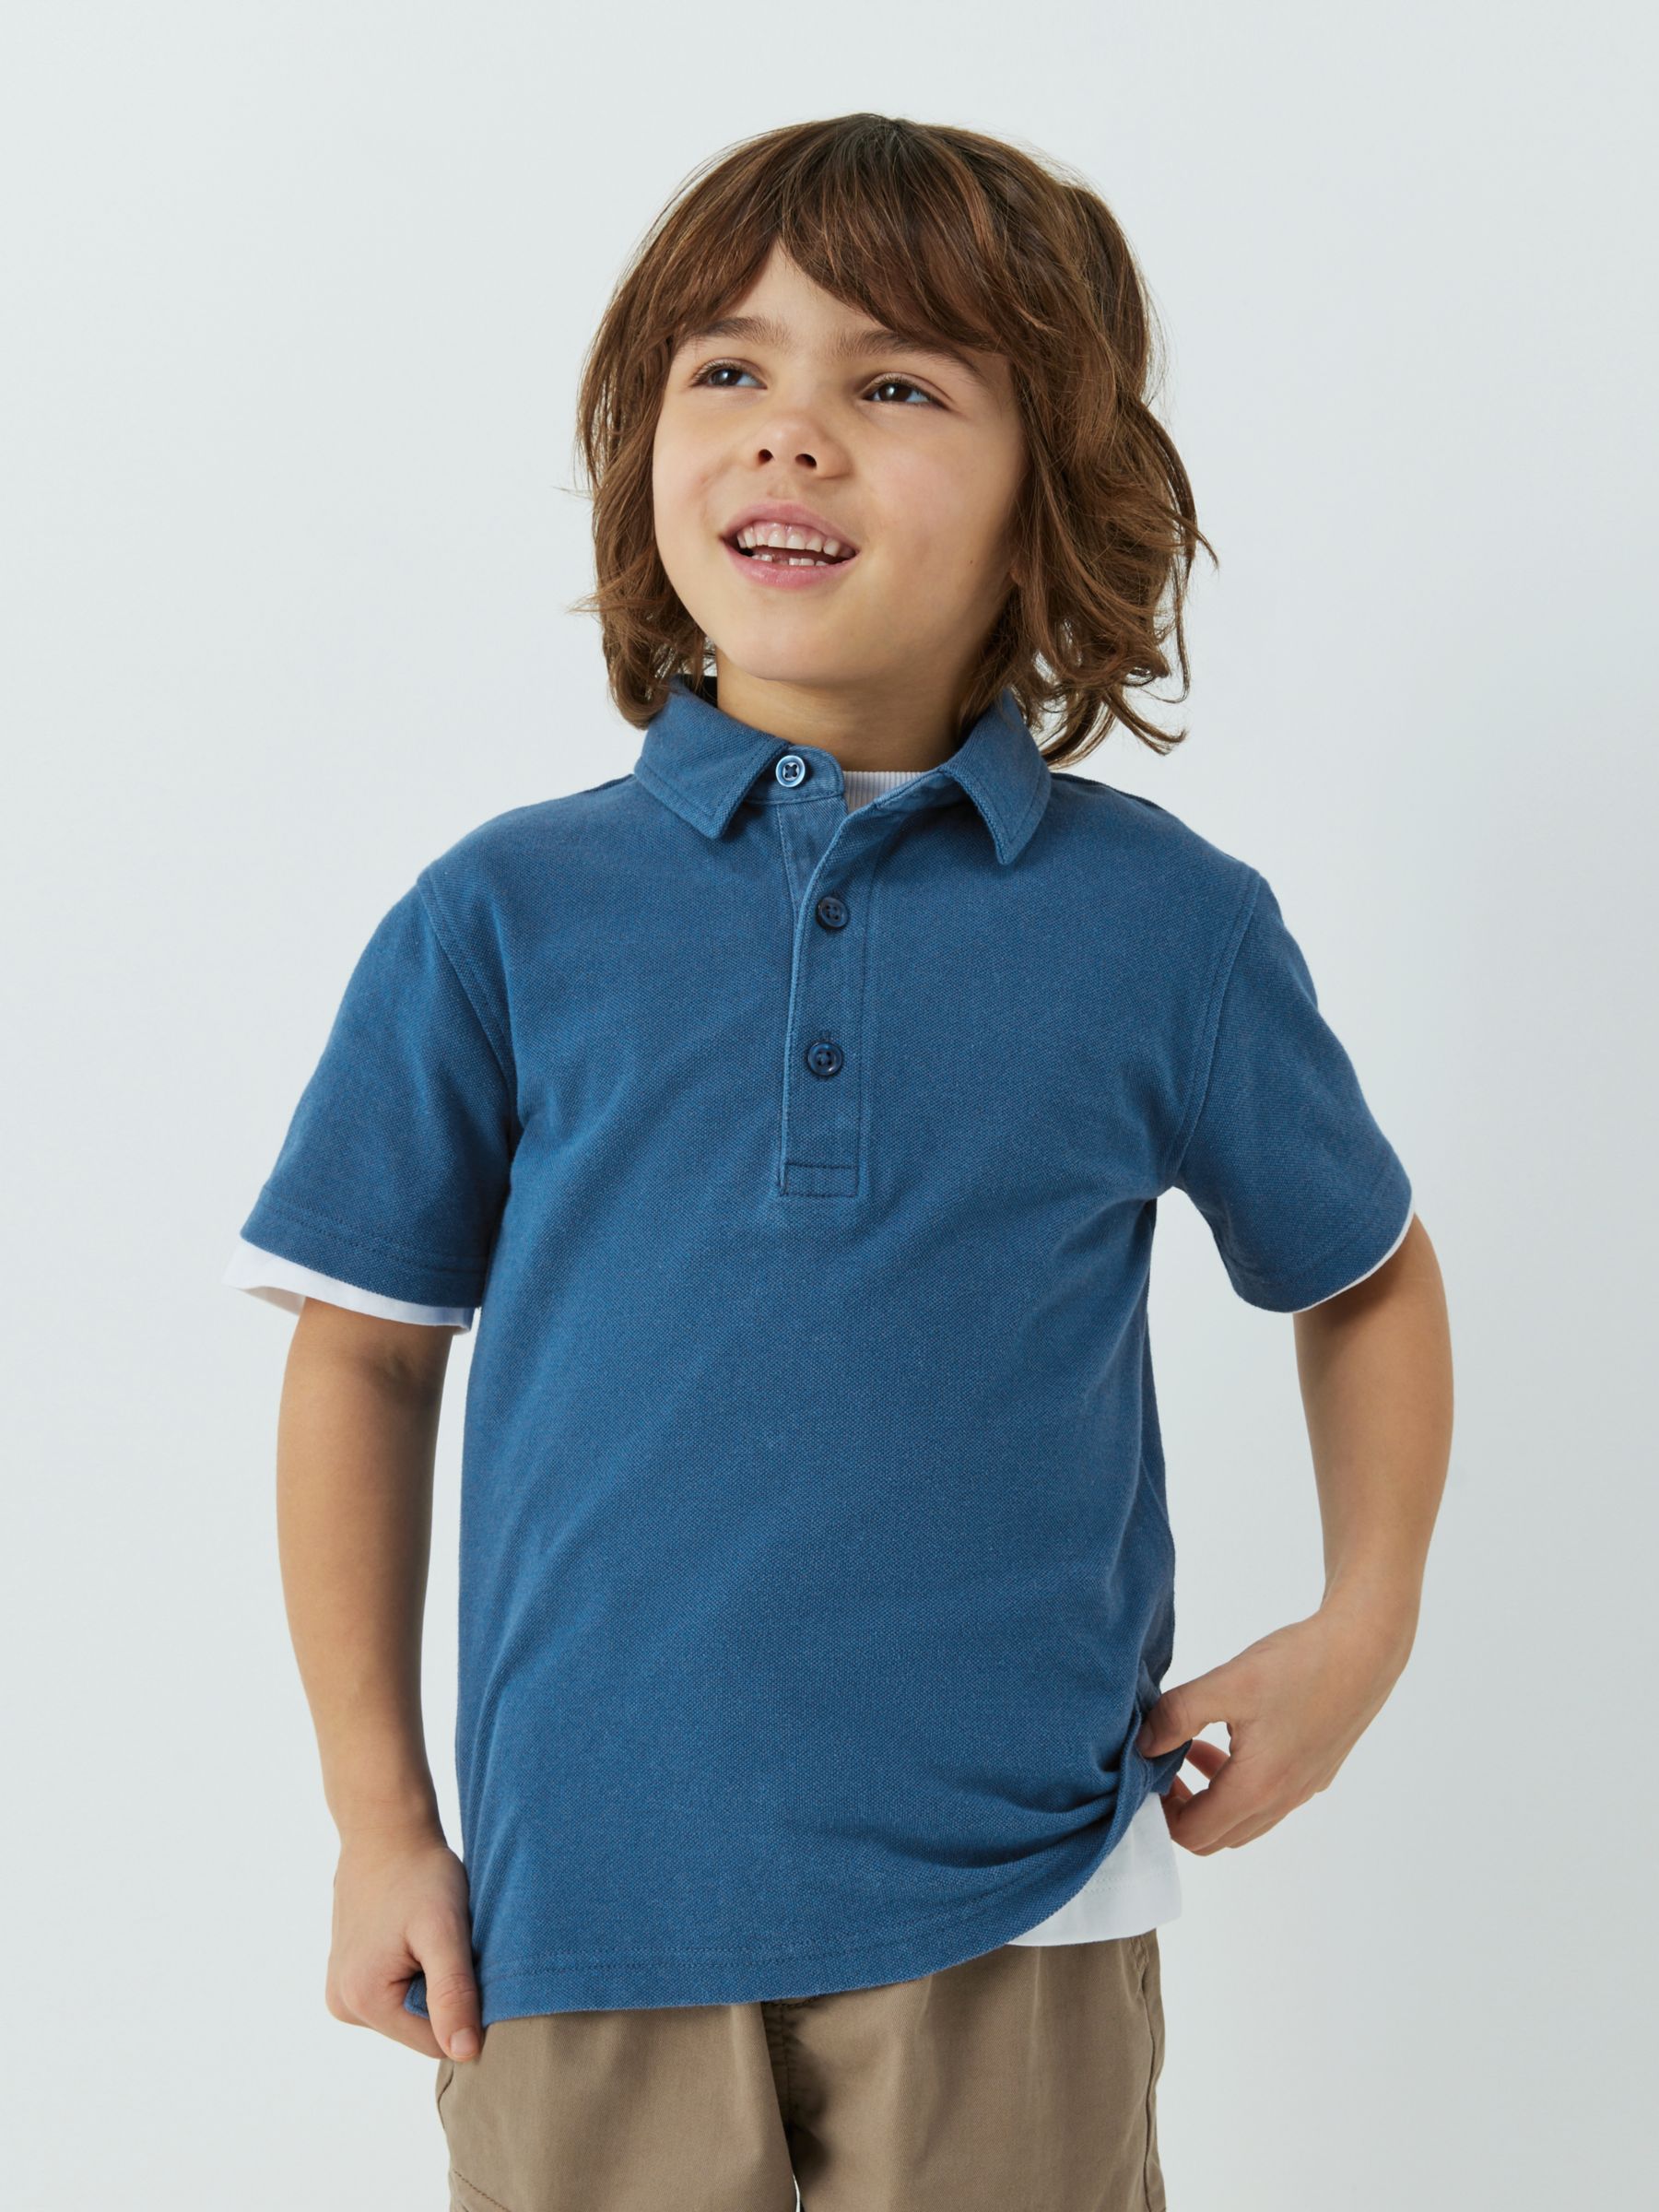 John Lewis Kids' Plain Pique Cotton Short Sleeve Polo Shirt, Mid Blue, 2 years